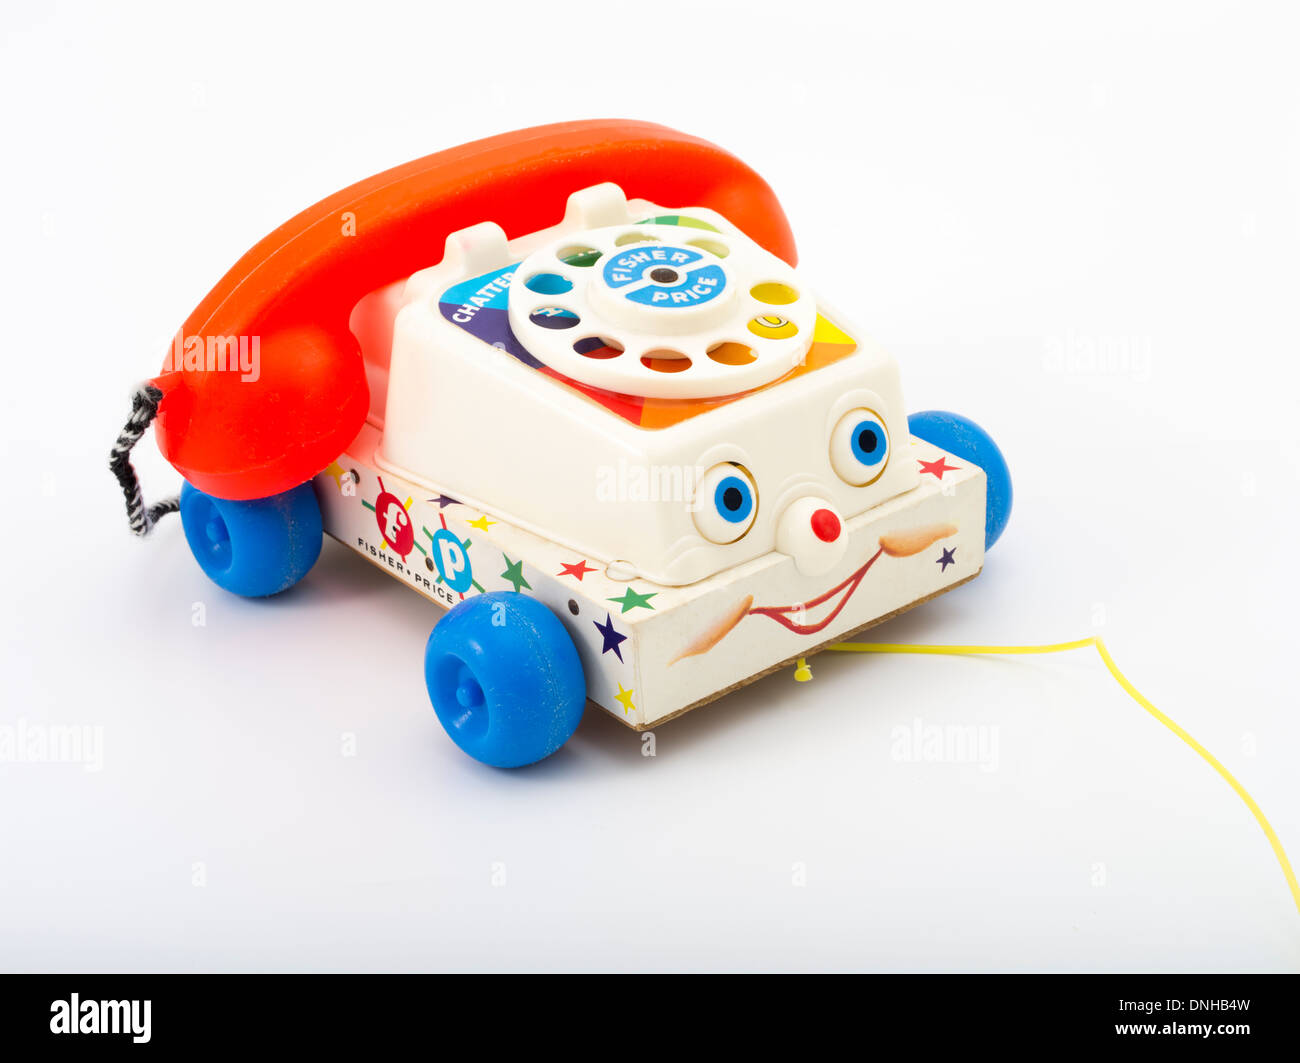 Fisher-Price ( Fisher Price ) Chatter telefono i bimbi a tirare toy telefono con manopola. dal 1962 Foto Stock